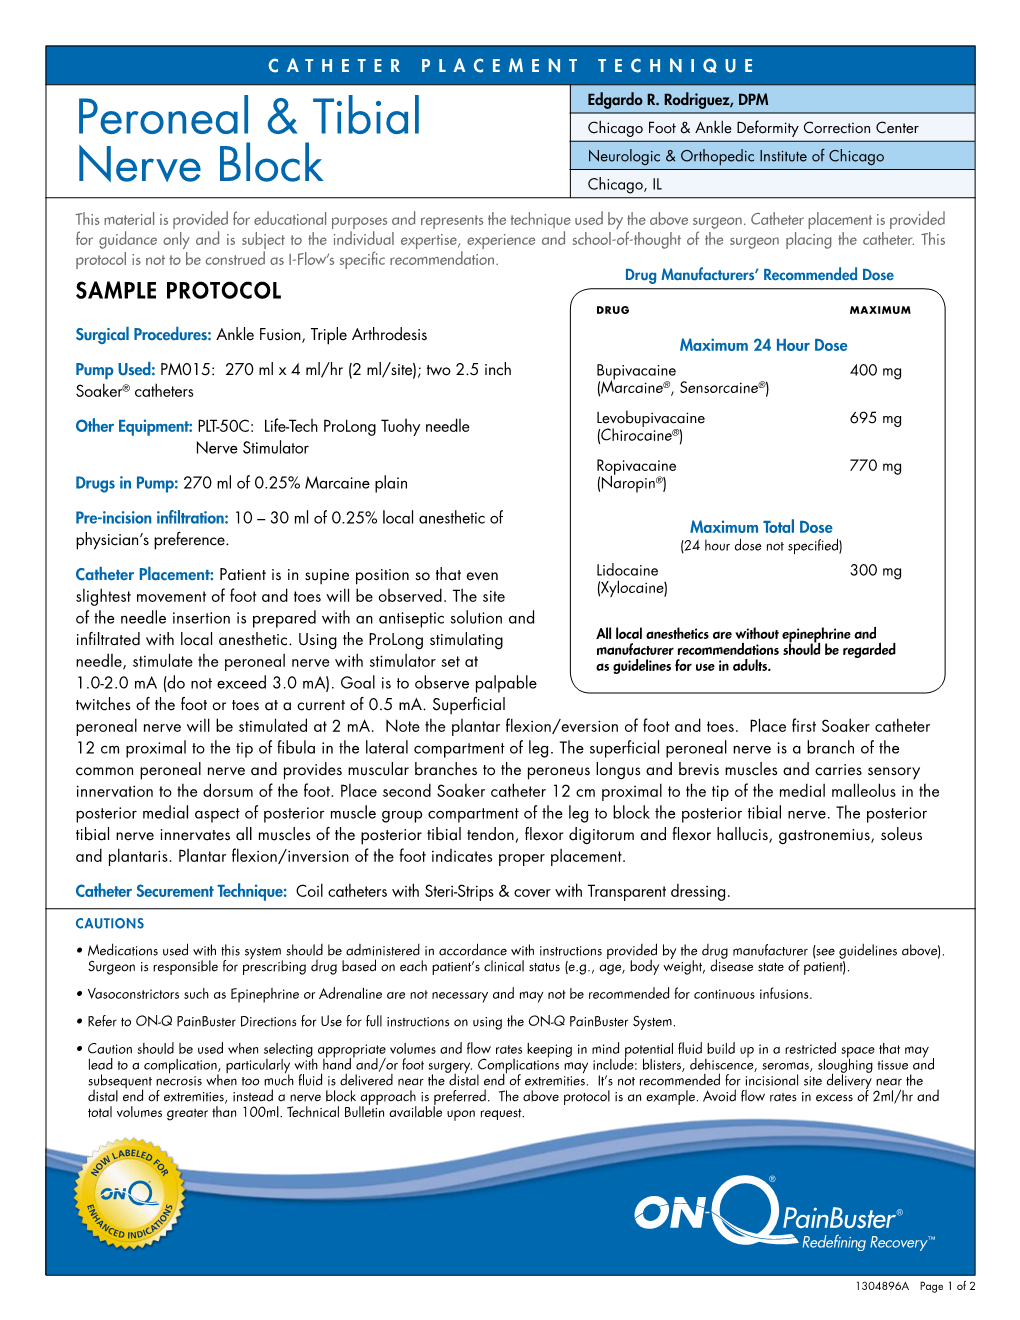 Peroneal & Tibial Nerve Block